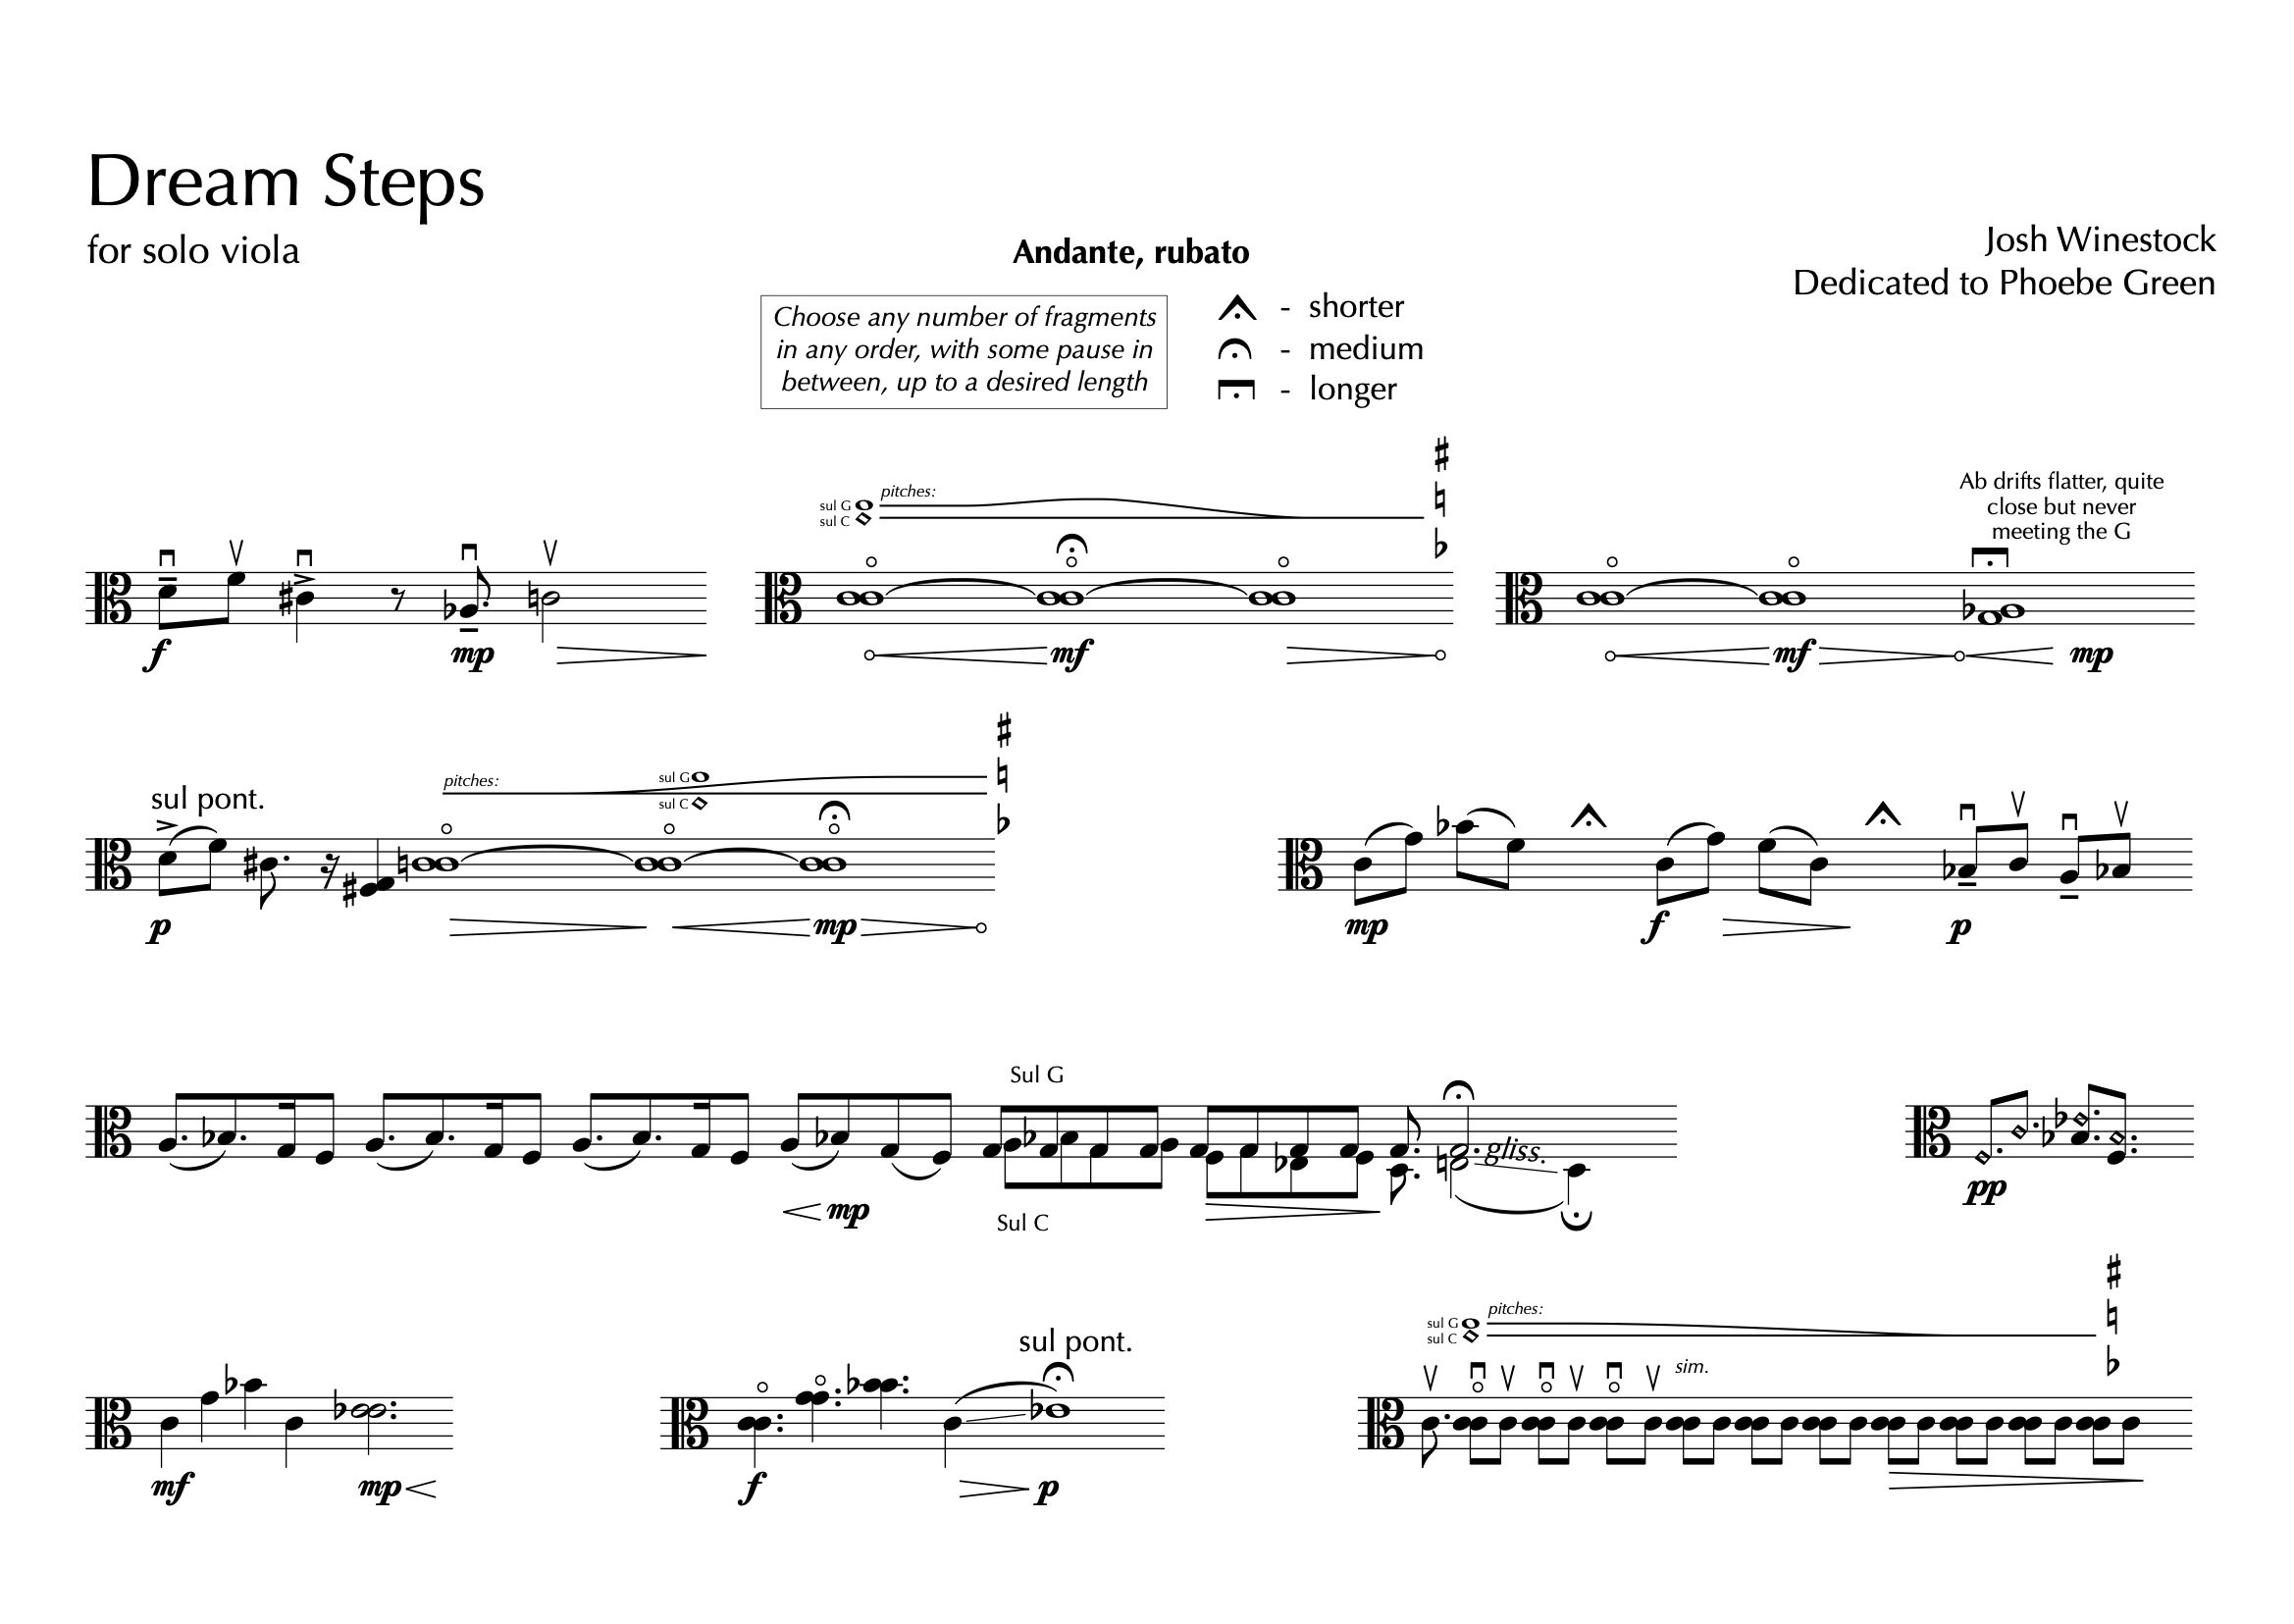 Dream Steps - Joshua Winestock.jpeg